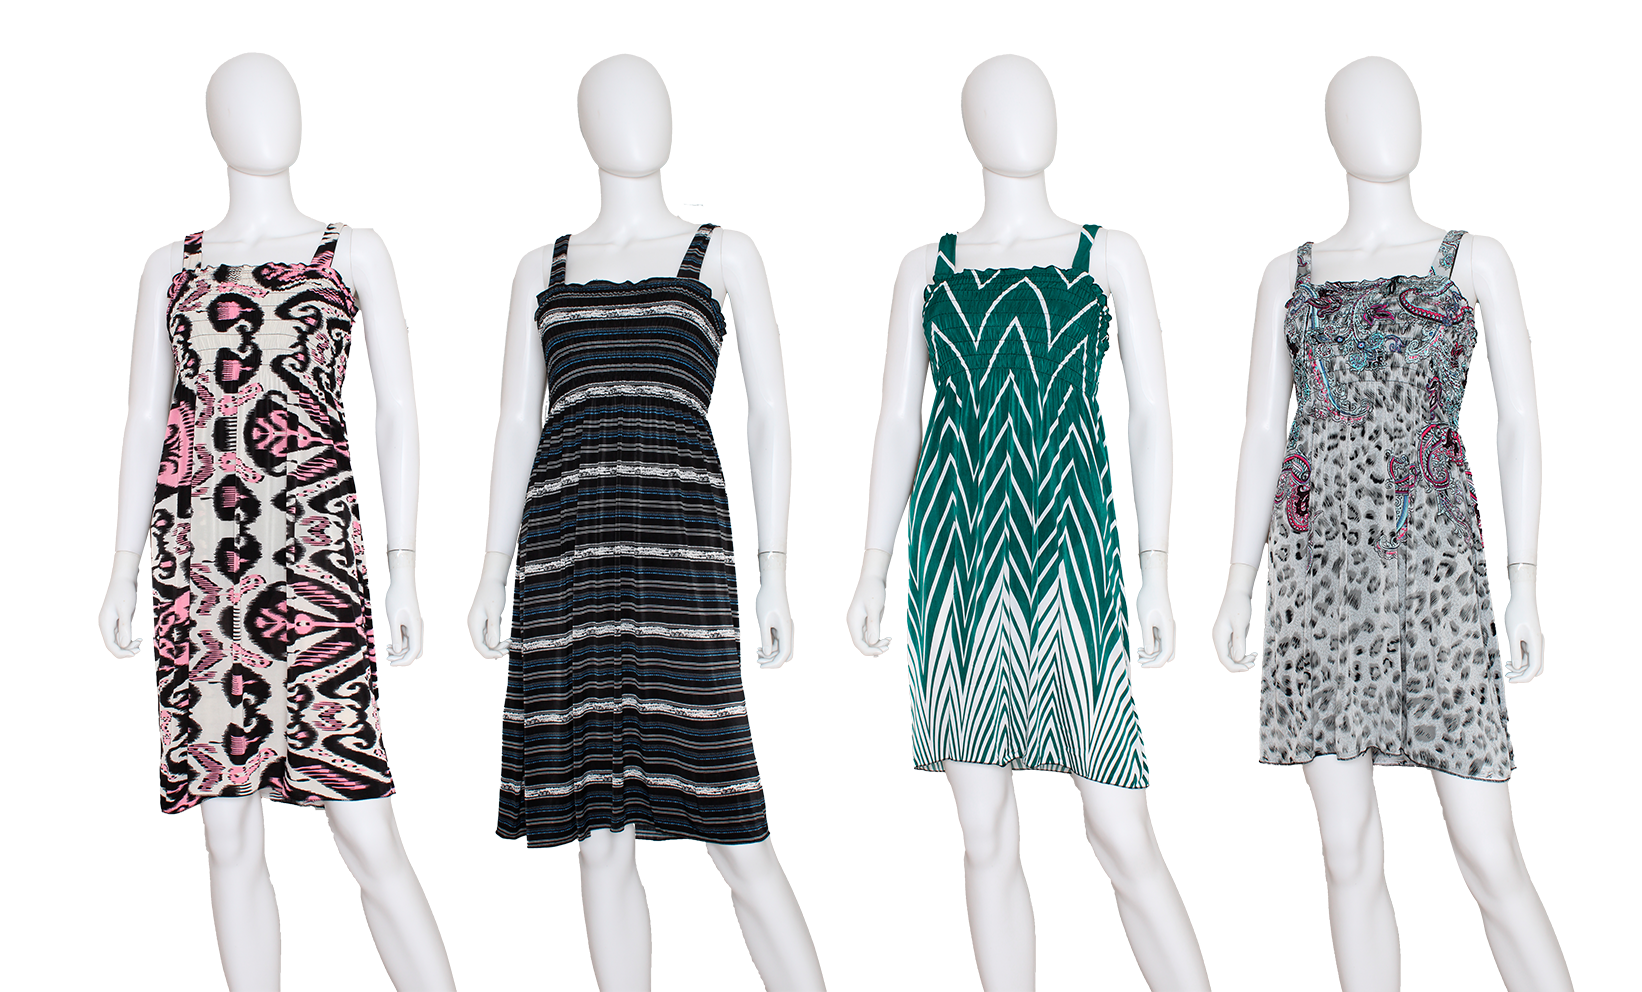 ''Women's Printed Smocked Chemise Dresses - Leopard, Chevron, Peacock, & Stripe Print - Sizes Medium-